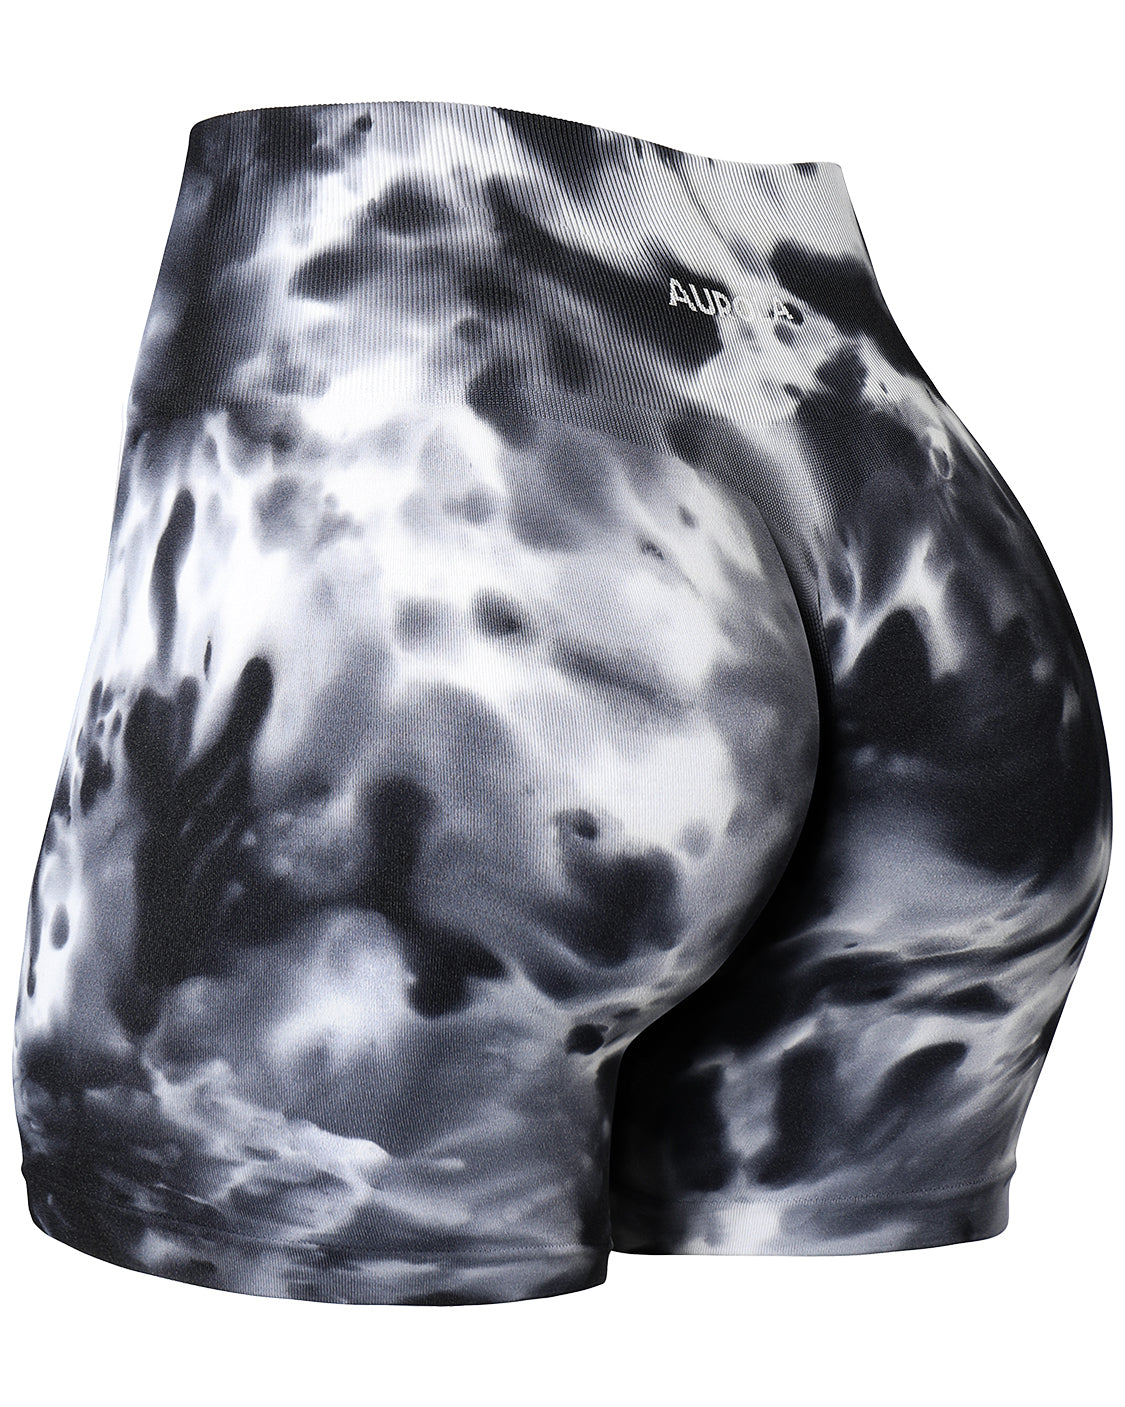  AUROLA Dream Tie Dye Workout Shorts For Women Seamless  Scrunch Soft Active Shorts